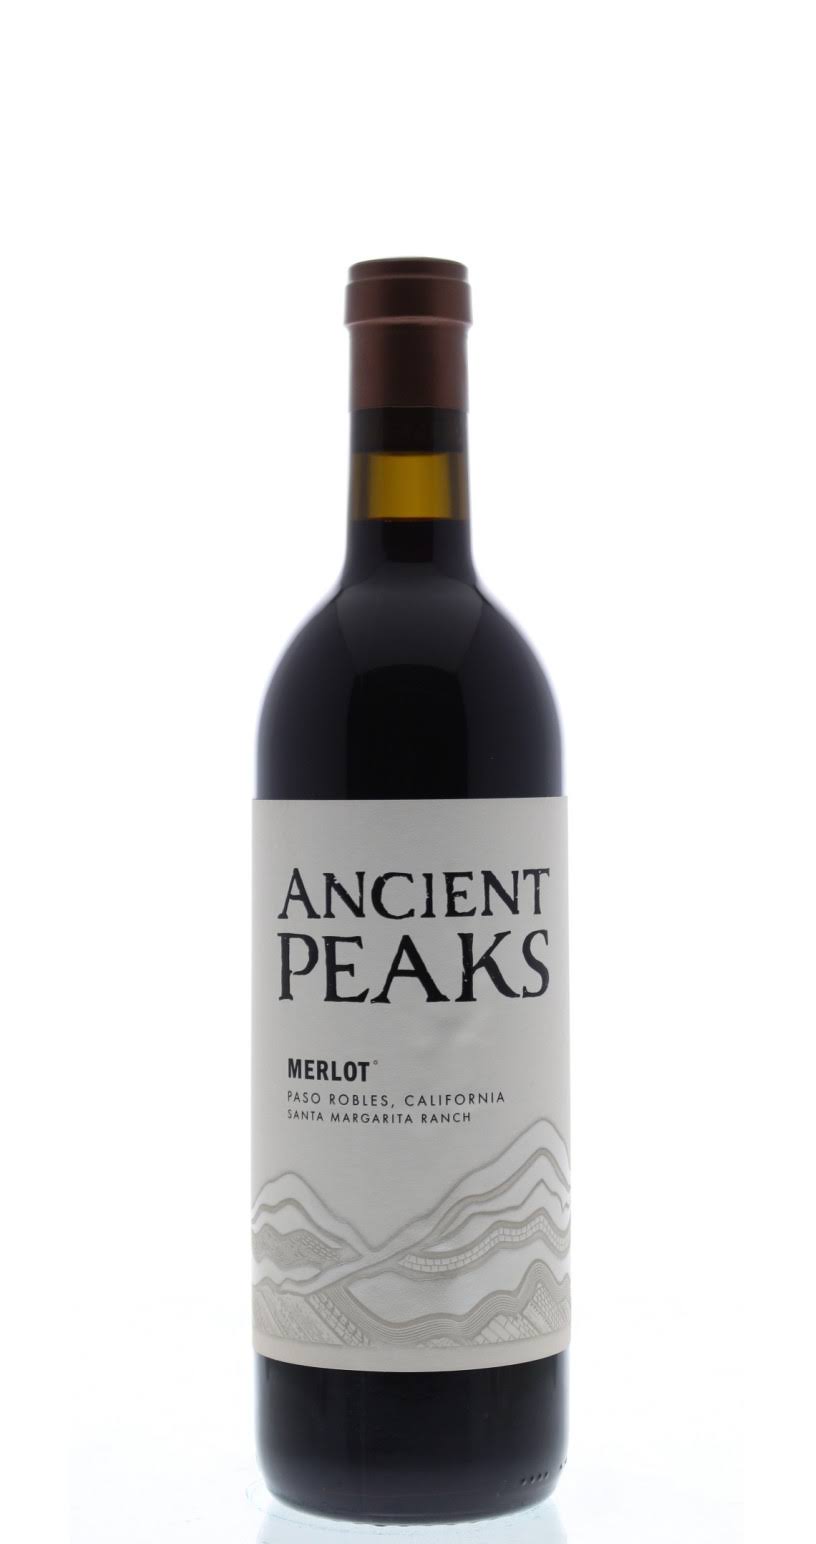 Ancient Peaks Merlot, Paso Robles (Vintage Varies) - 750 ml bottle